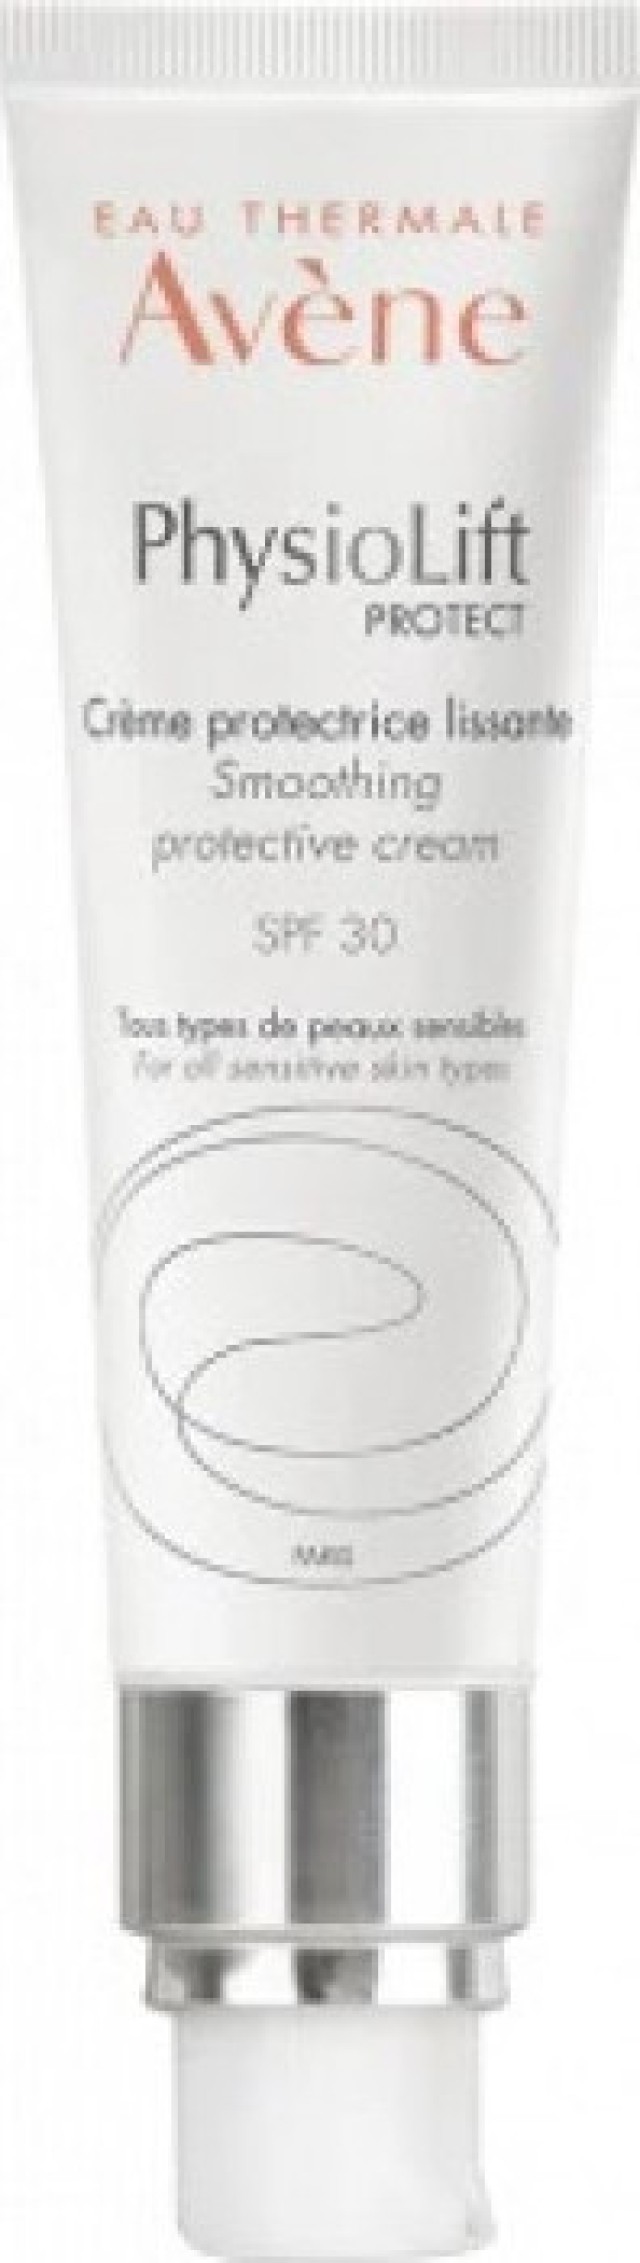 Avene Physiolift Smoothing Cream SPF30, 30ml